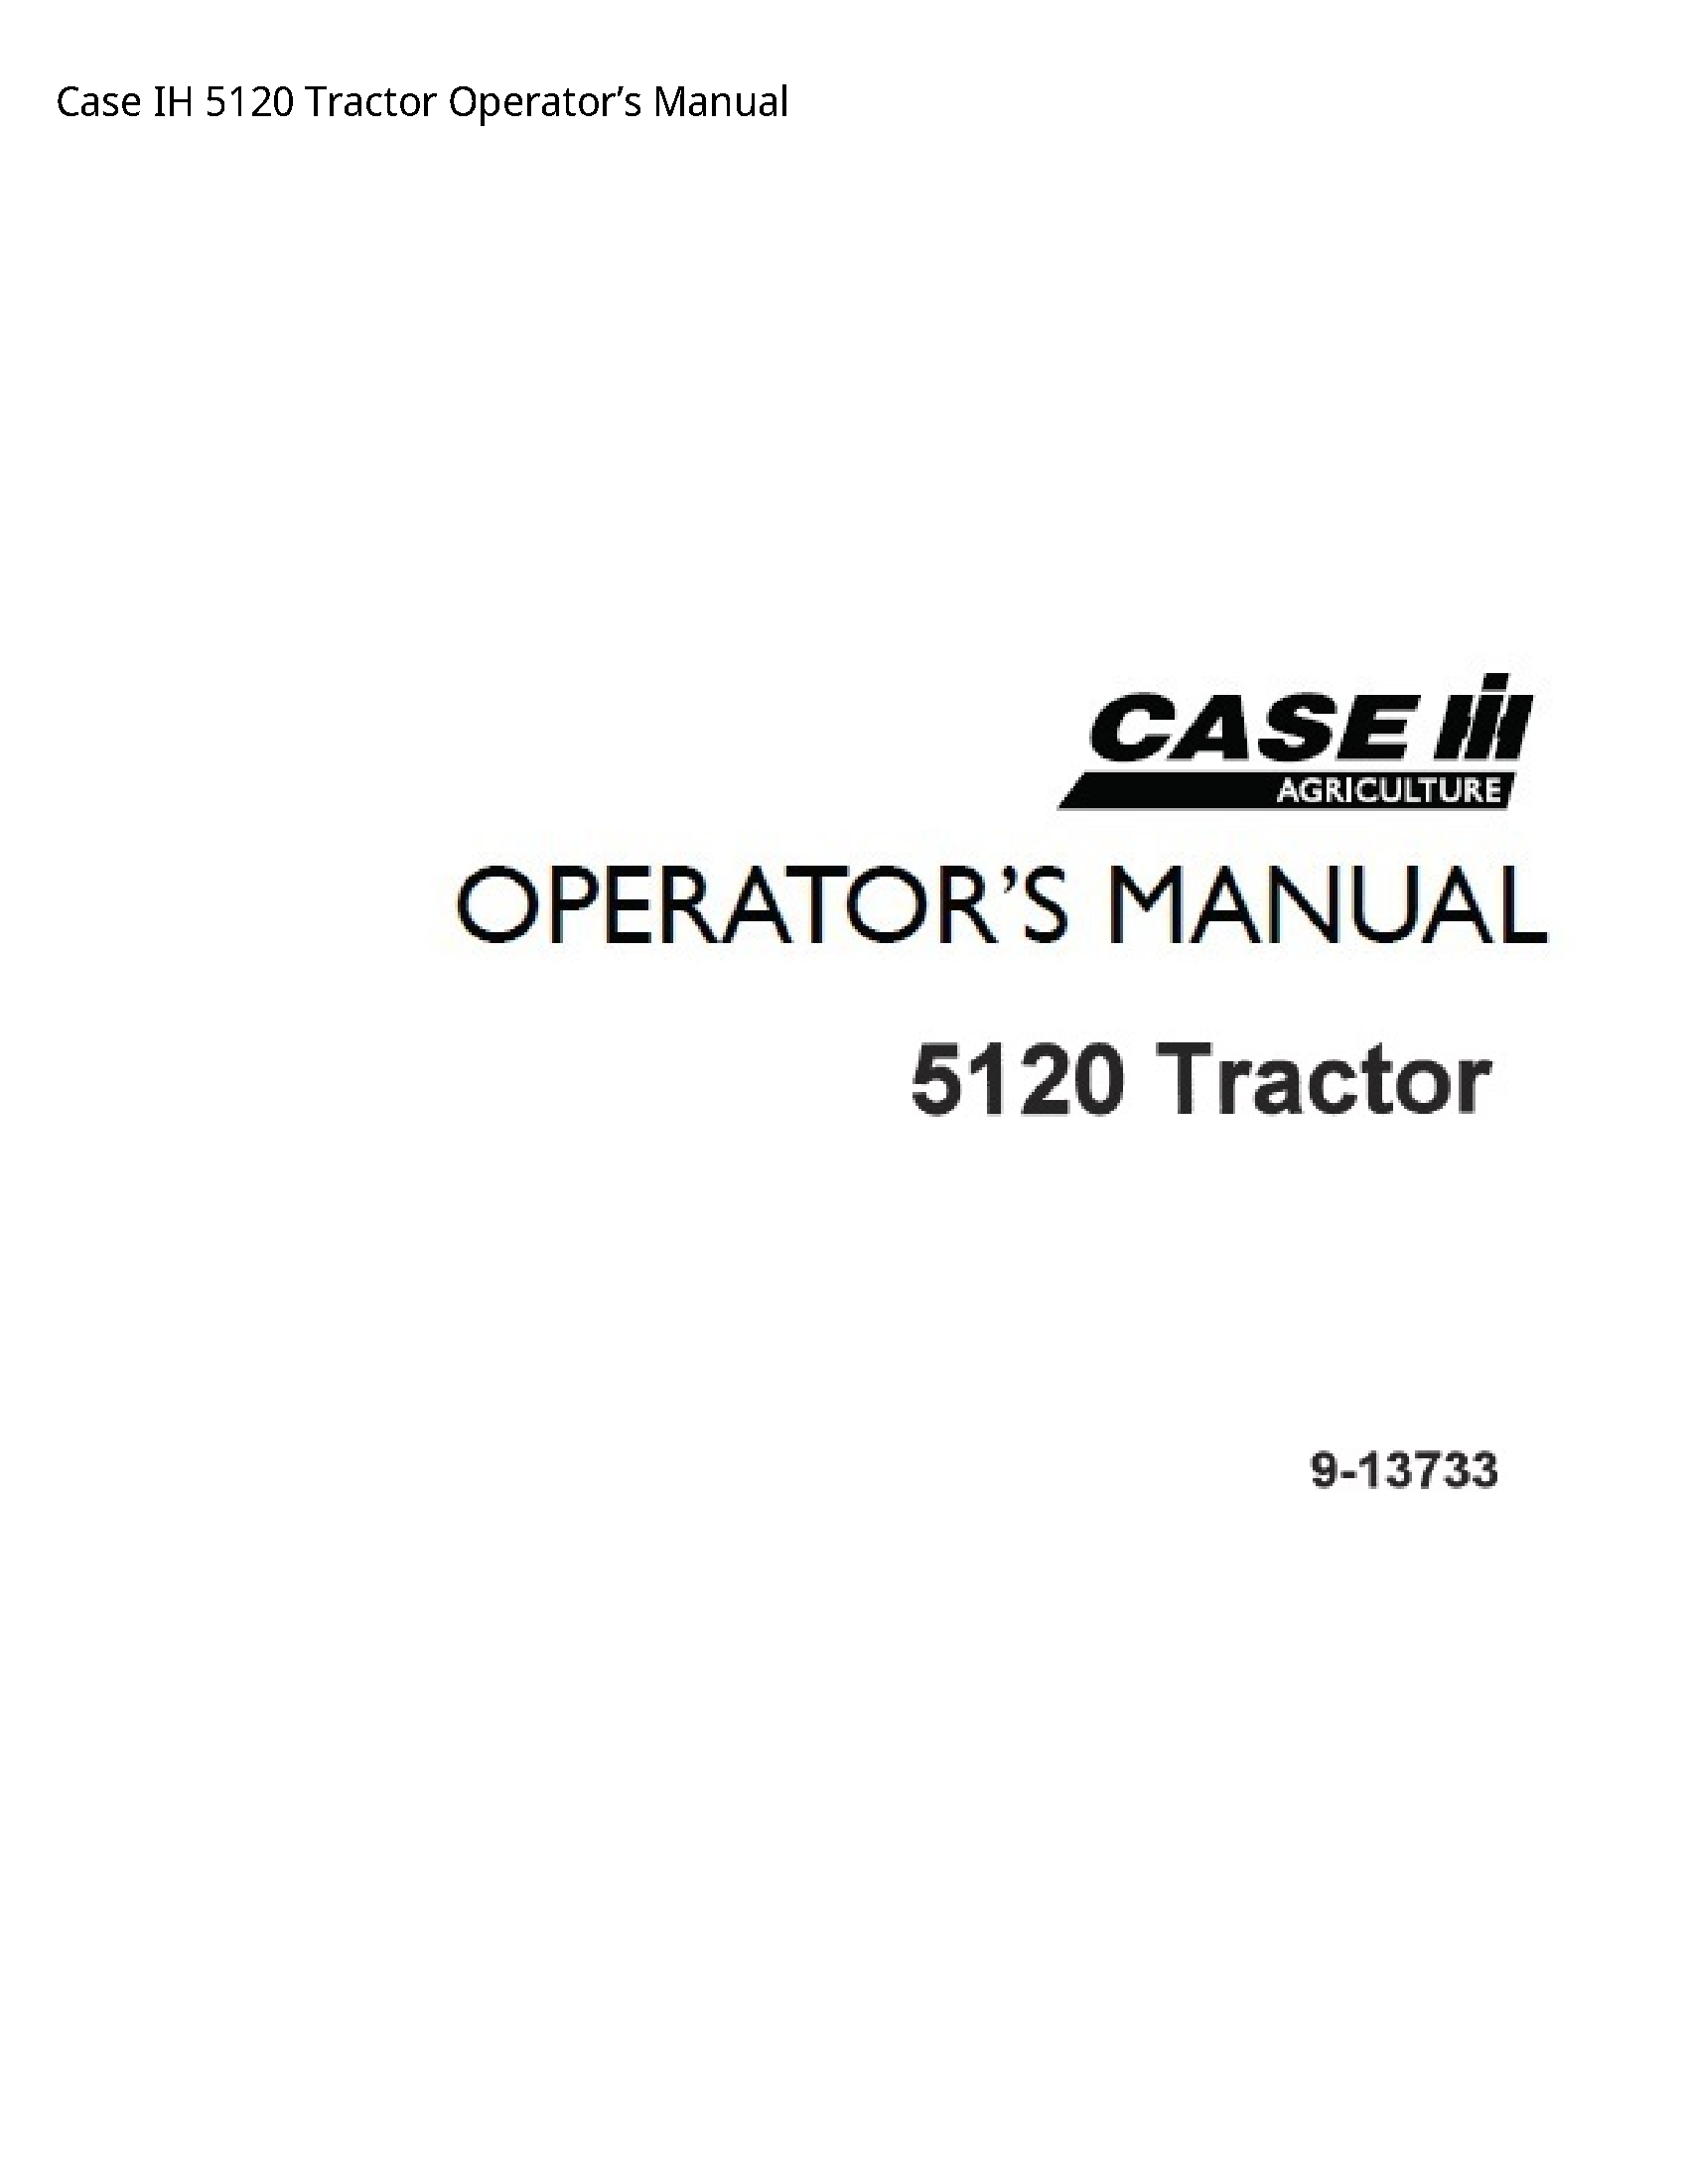 Case/Case IH 5120 IH Tractor Operator’s manual